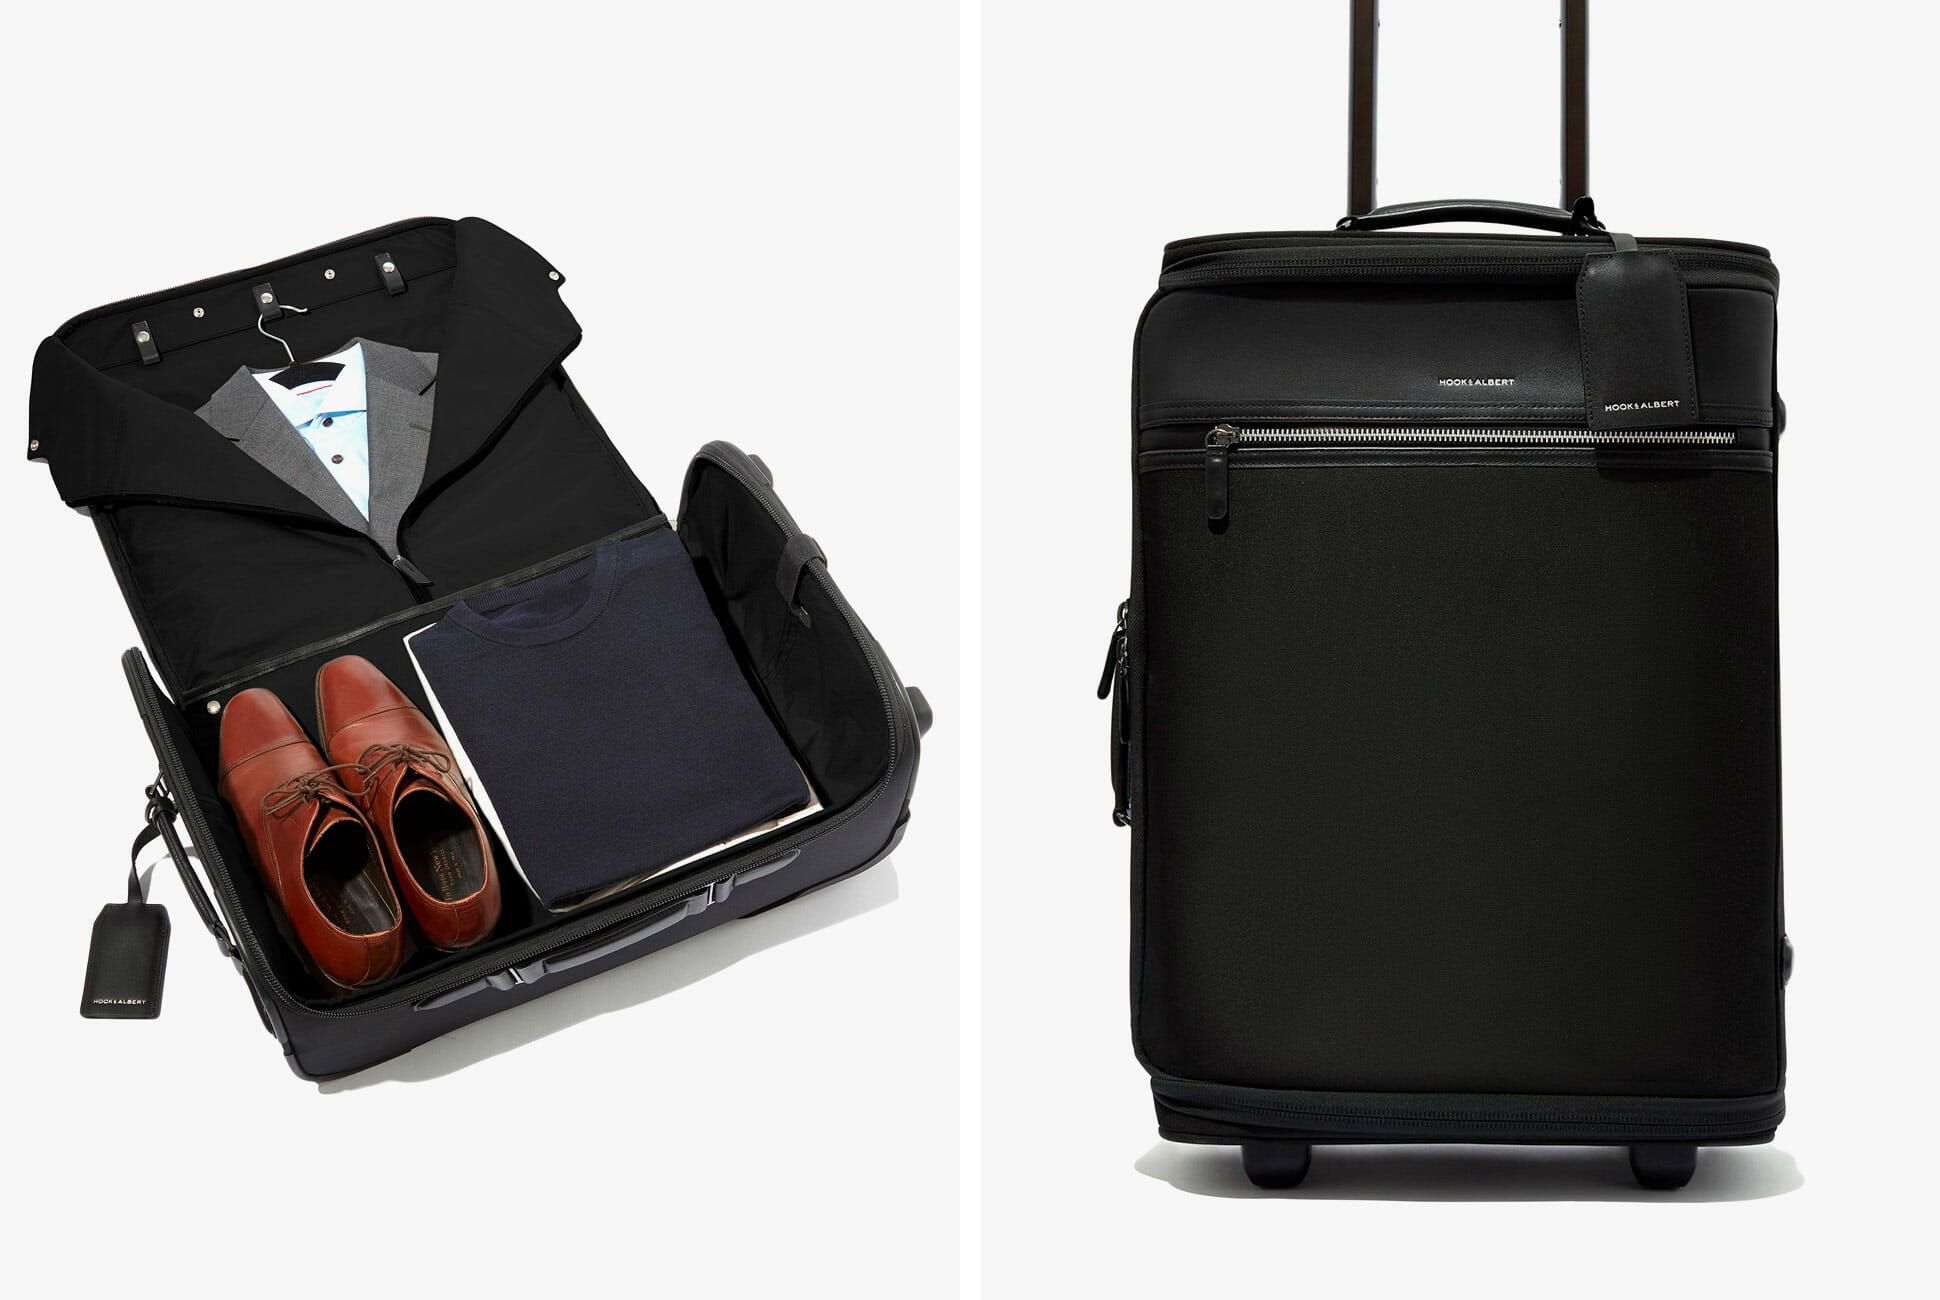 Hook & Albert Garment Carry on Luggage - Black